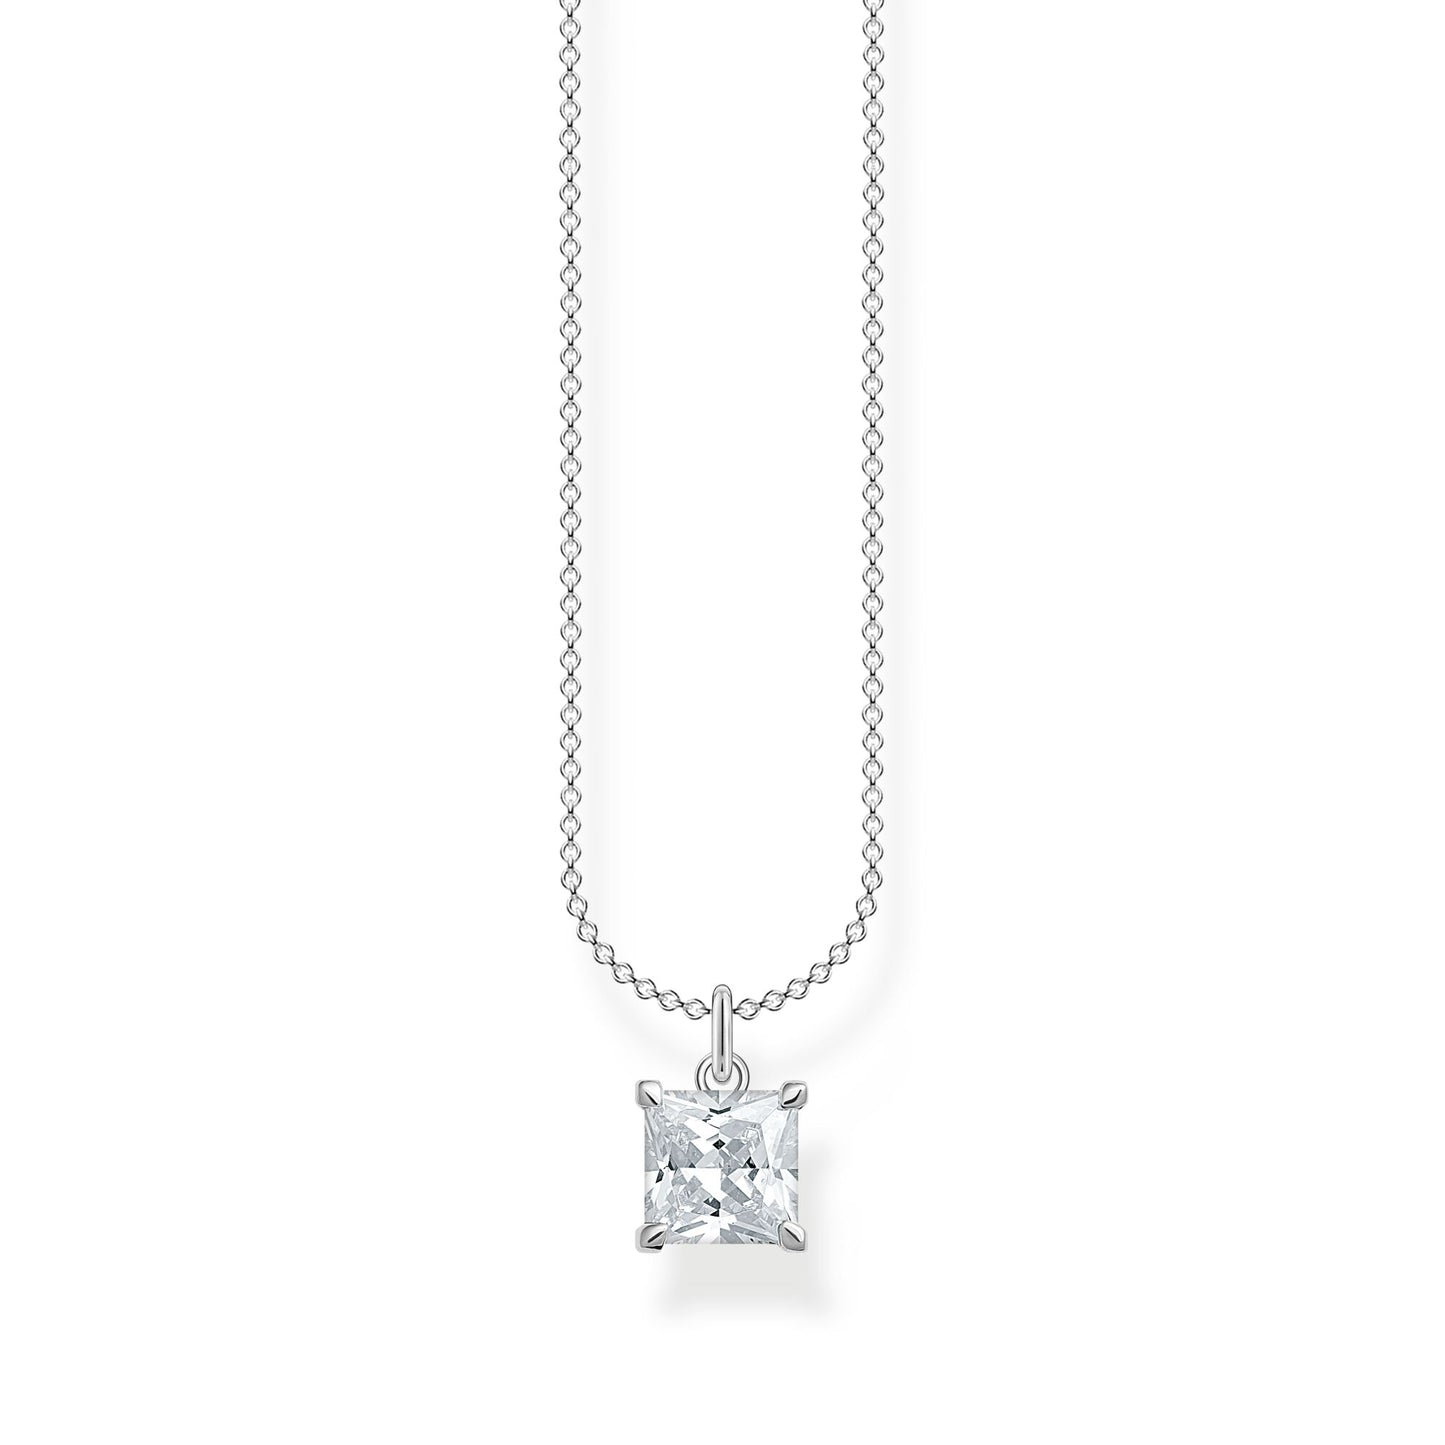 Thomas Sabo Necklace With White Stone Silver KE2156-051-14